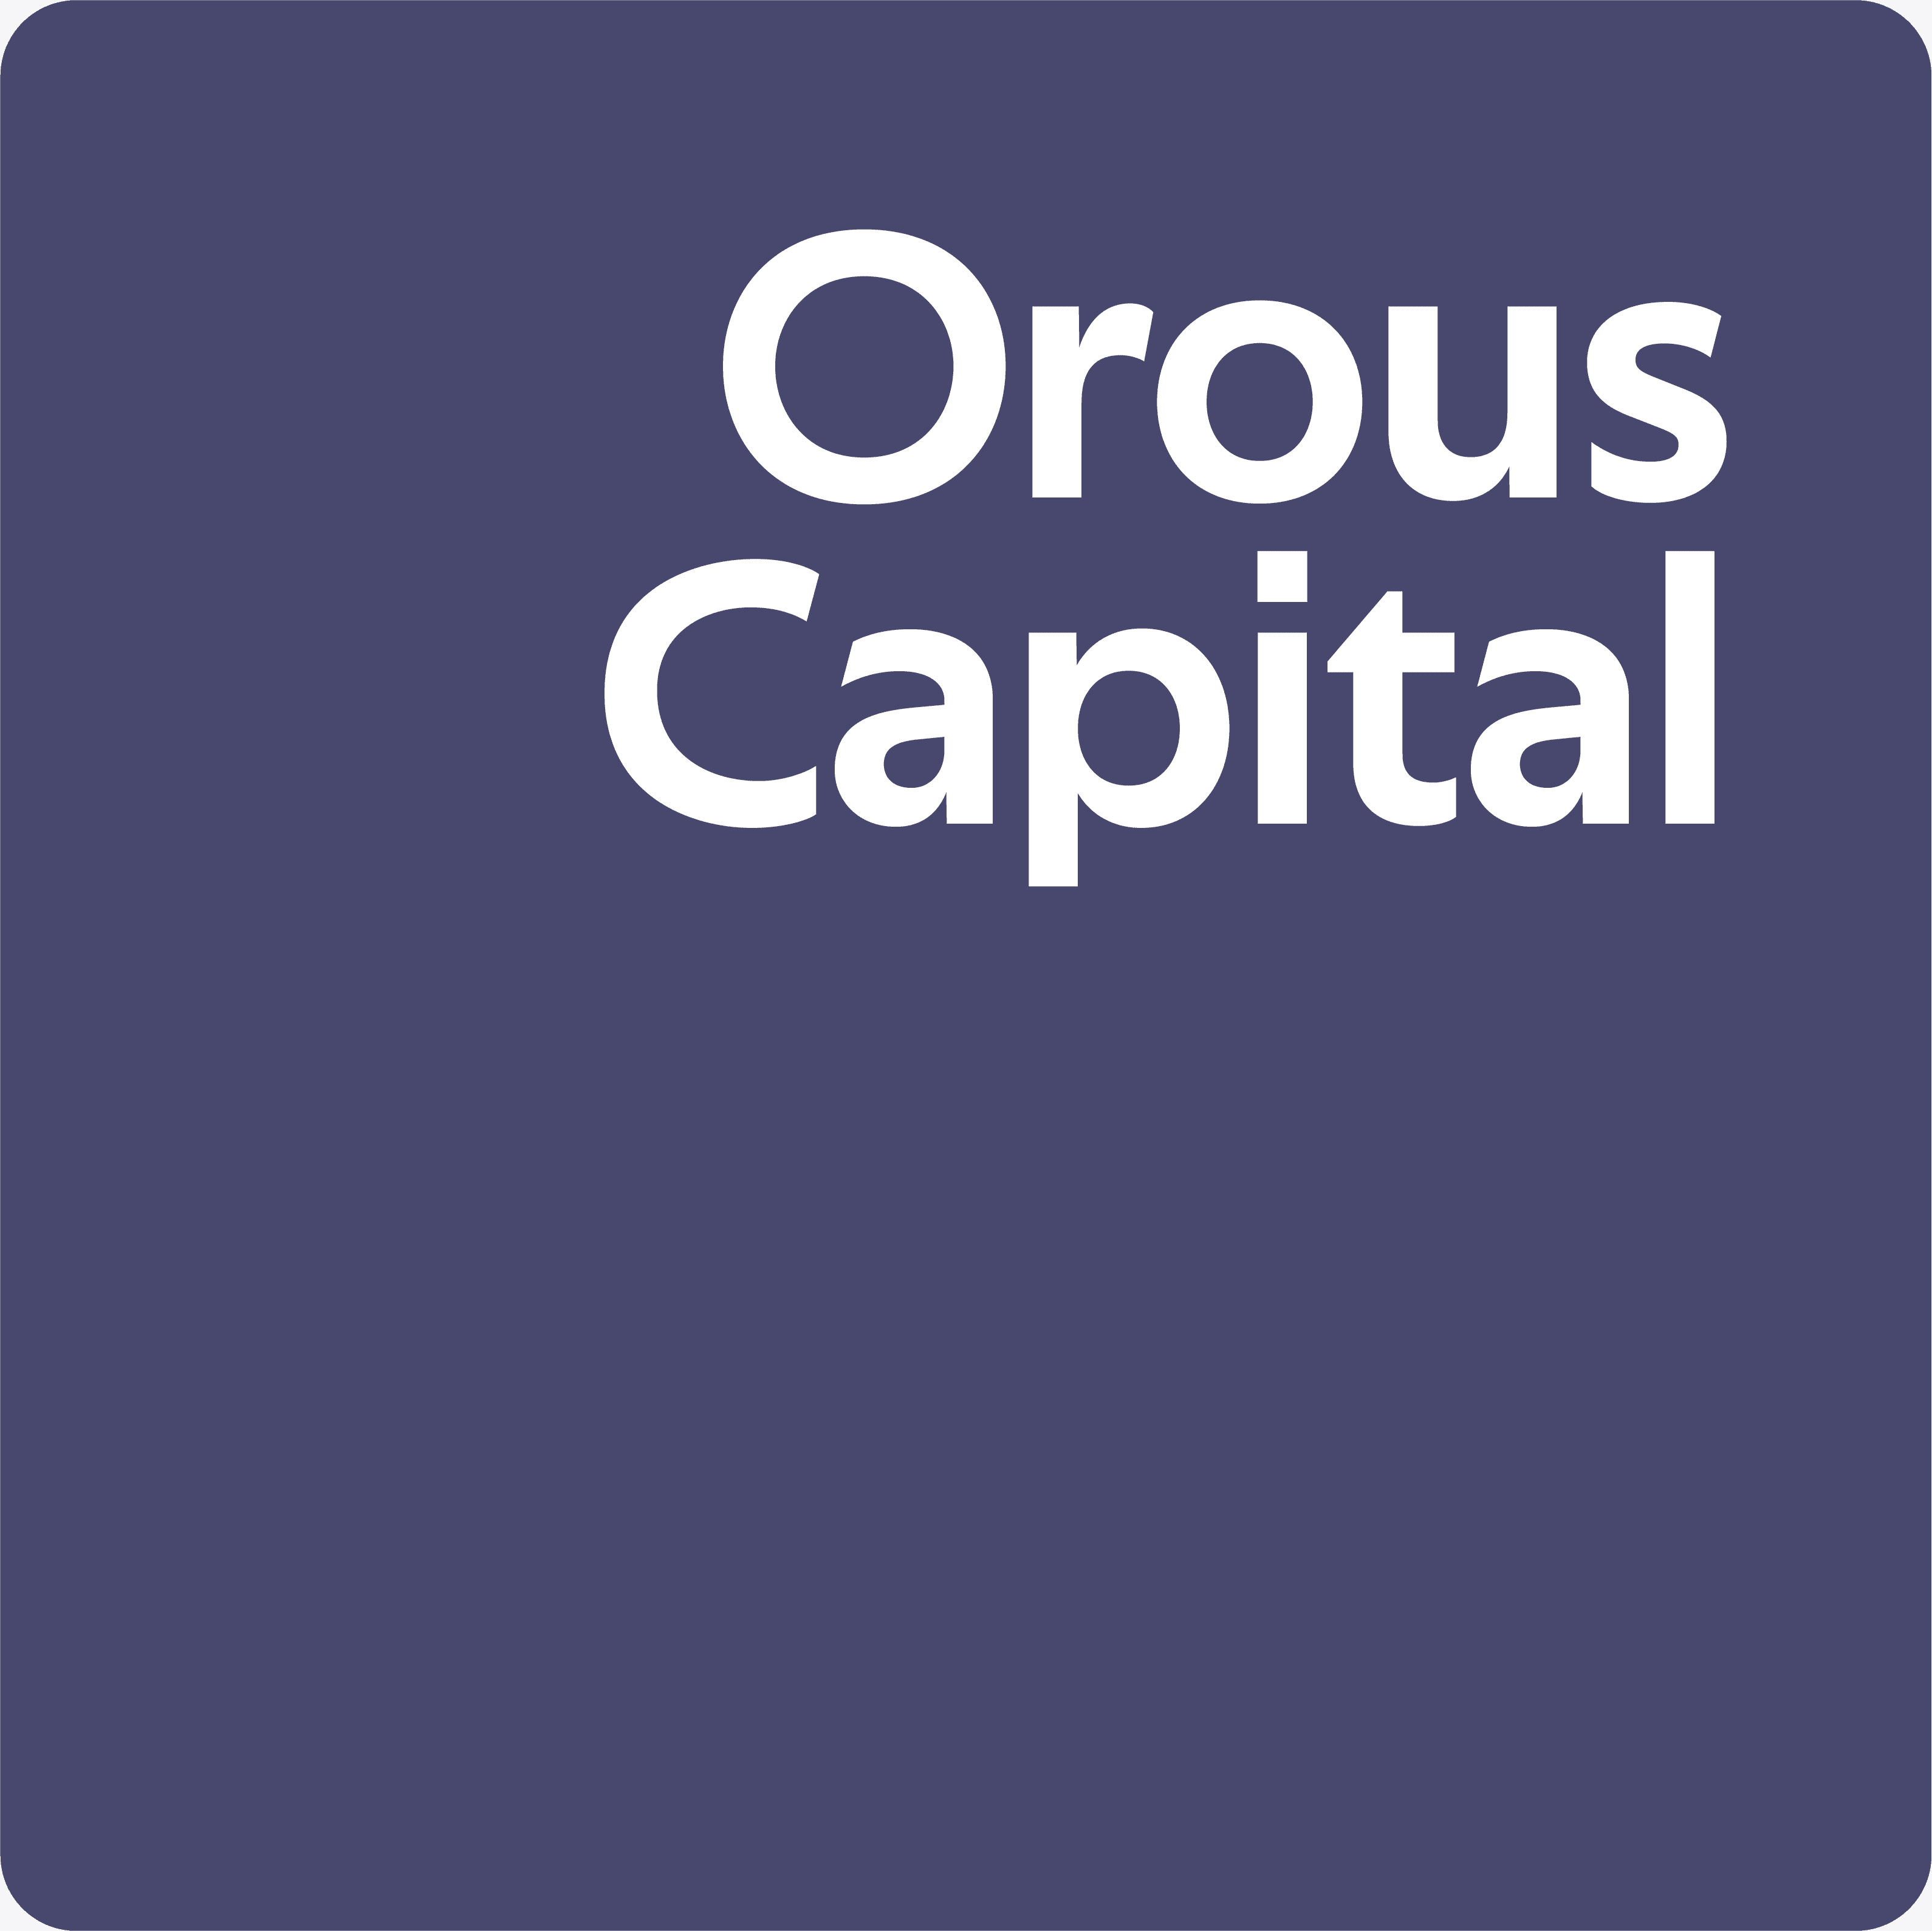 Orous capital logo header 2